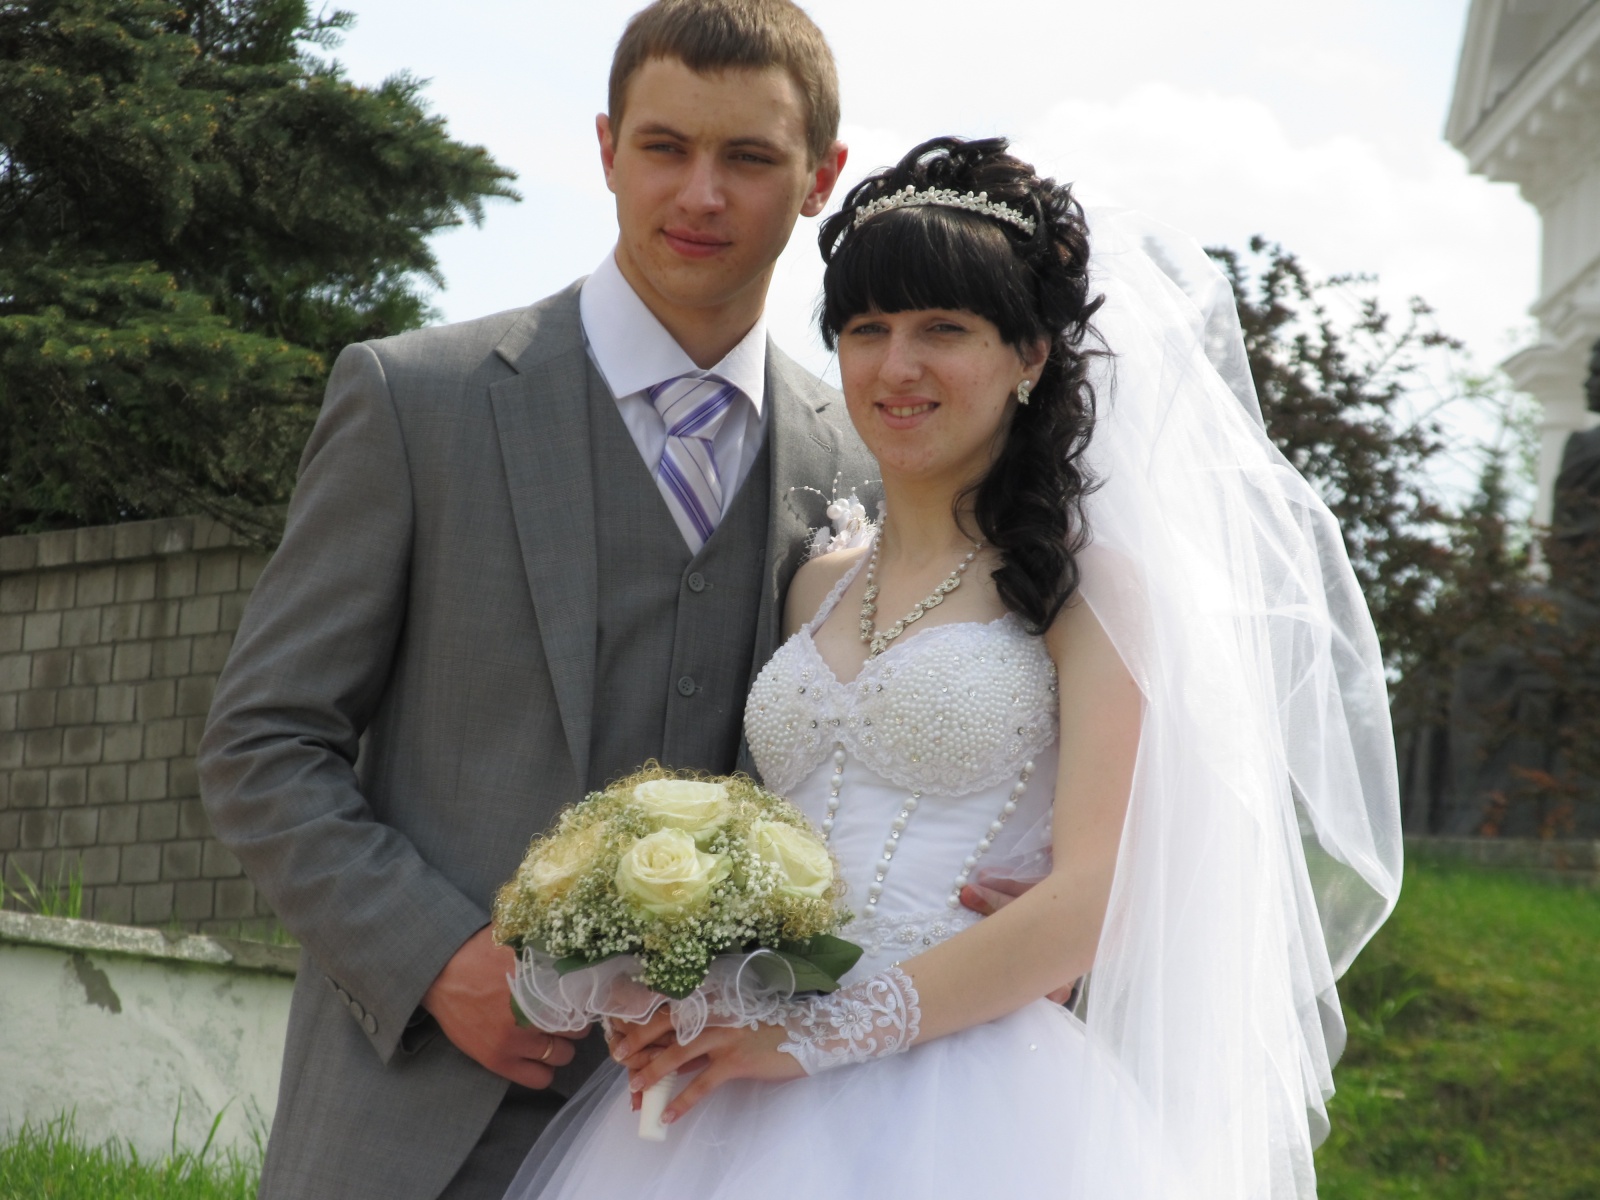 Фотография для критики "Свадьба" | Фотограф Александр Дунец | foto.by фото.бай